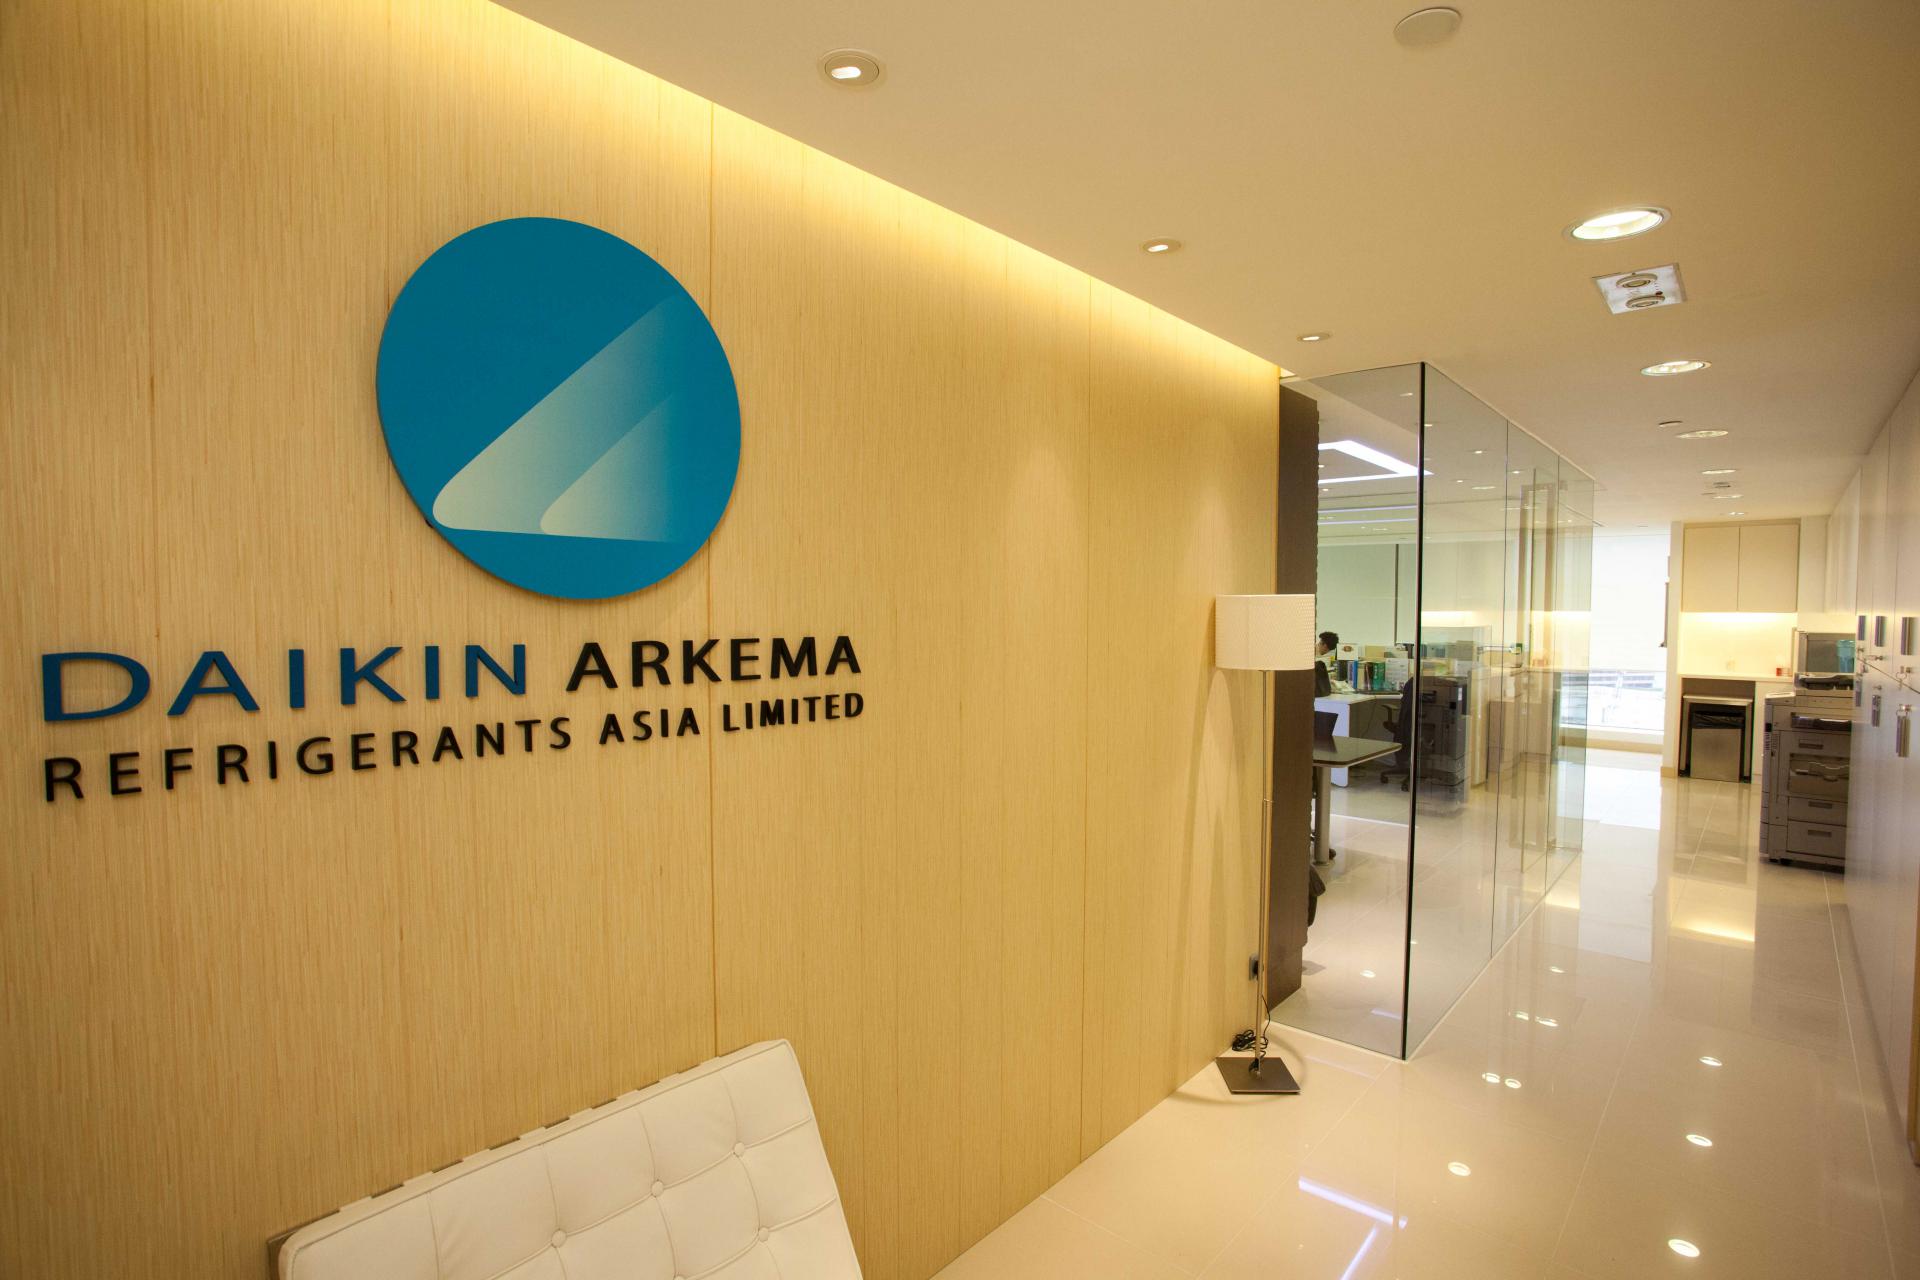 Daikin Arkema Refrigerants Asia Limited